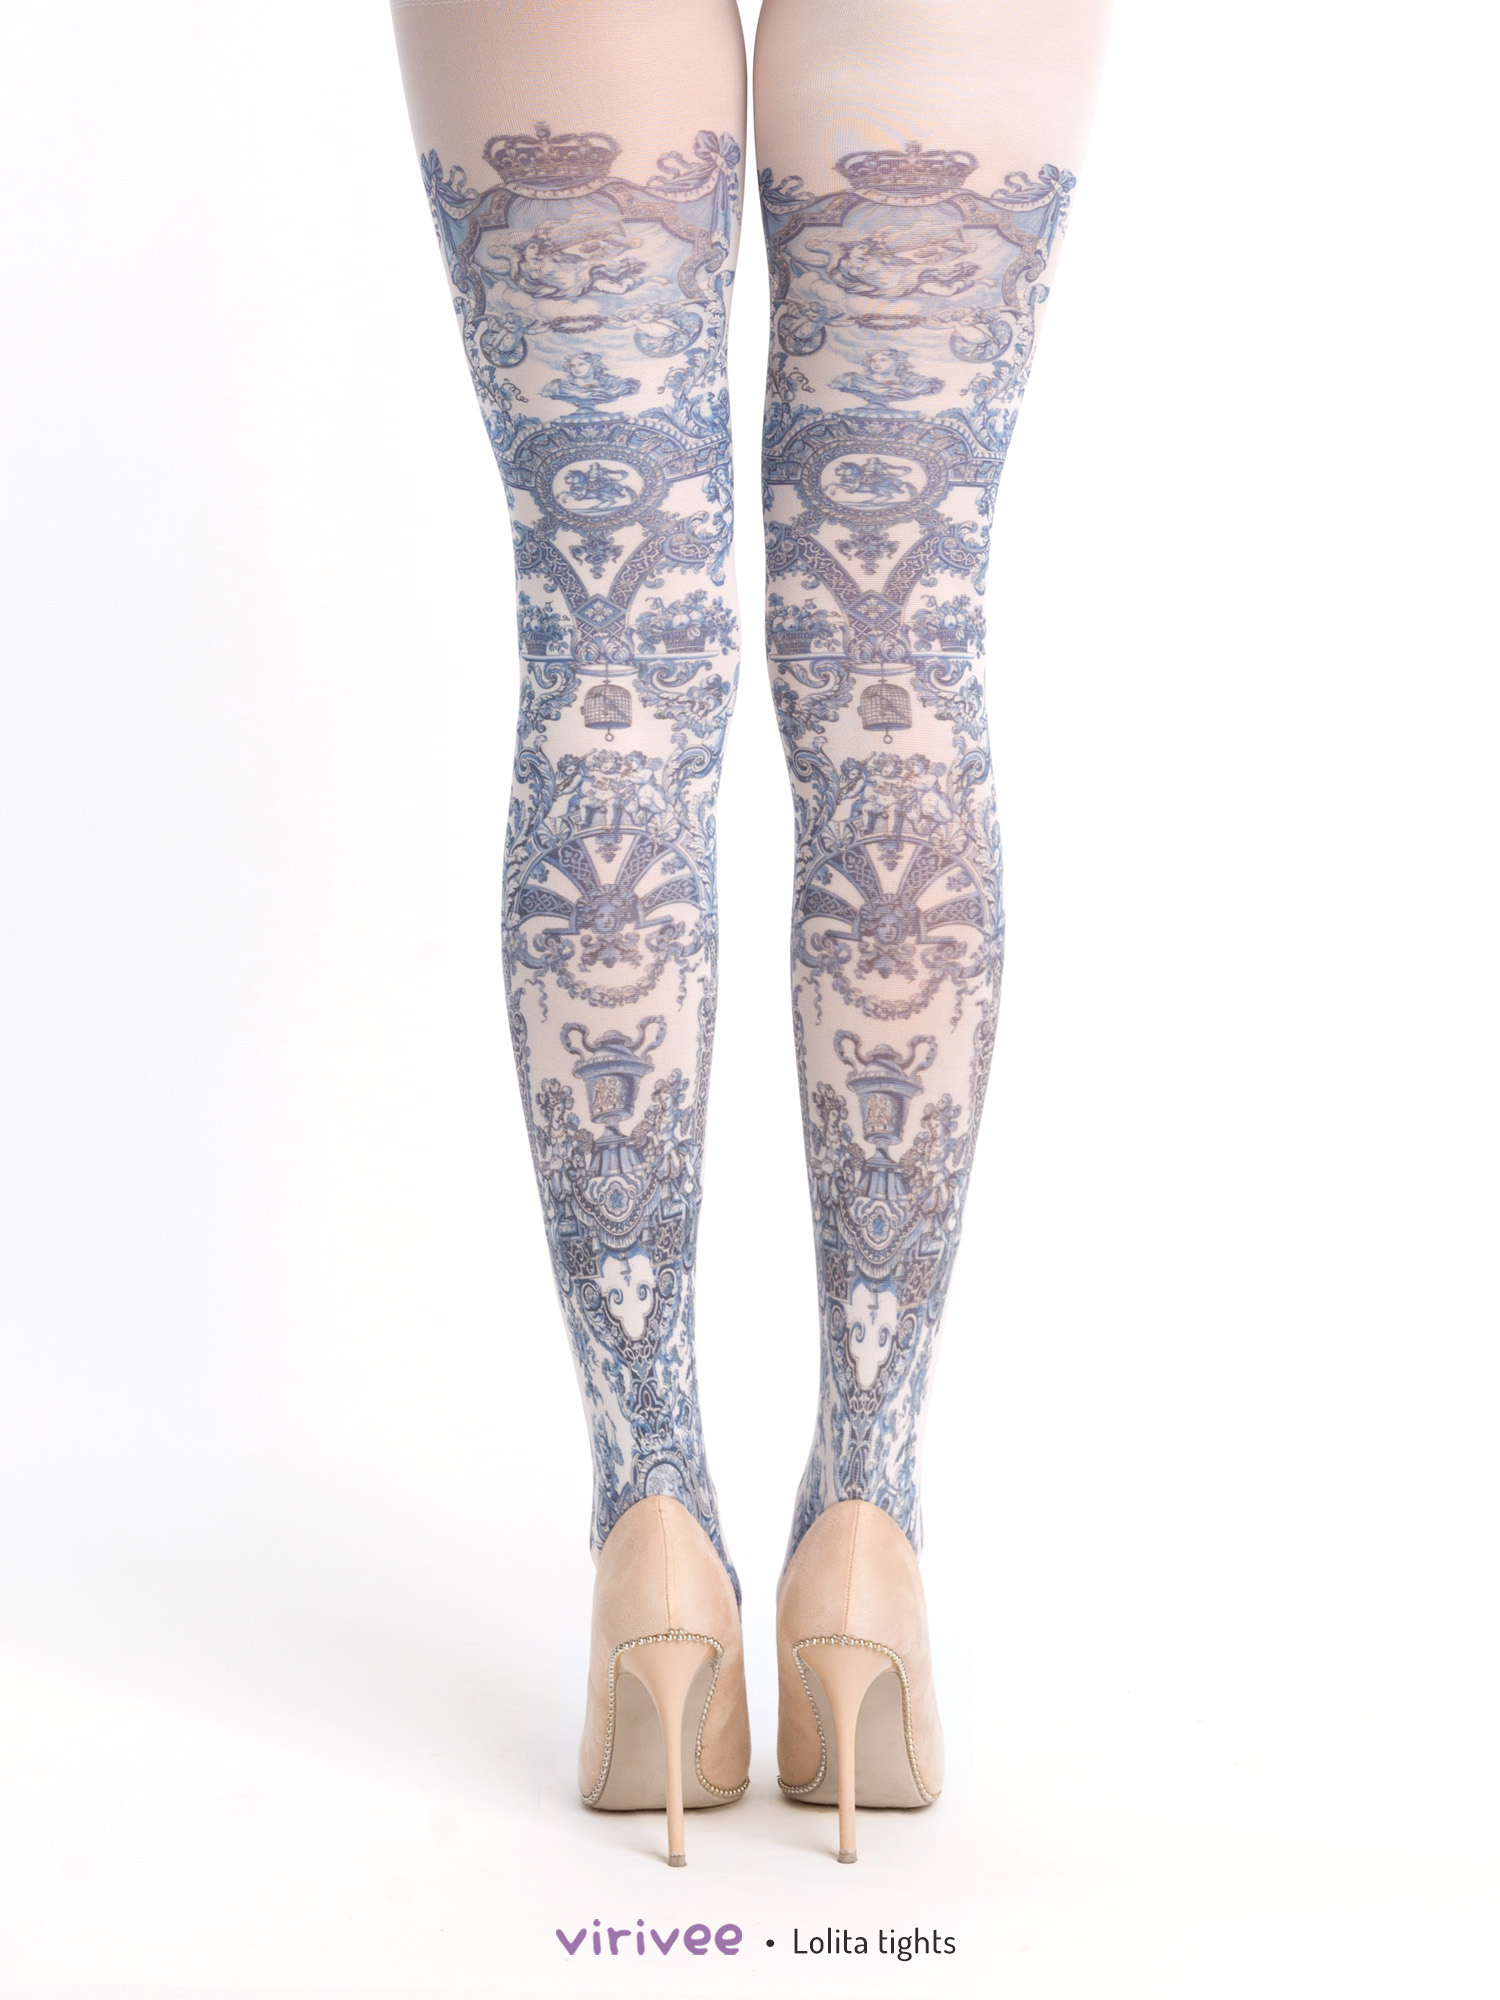 Lolita tights in S-4XL sizes